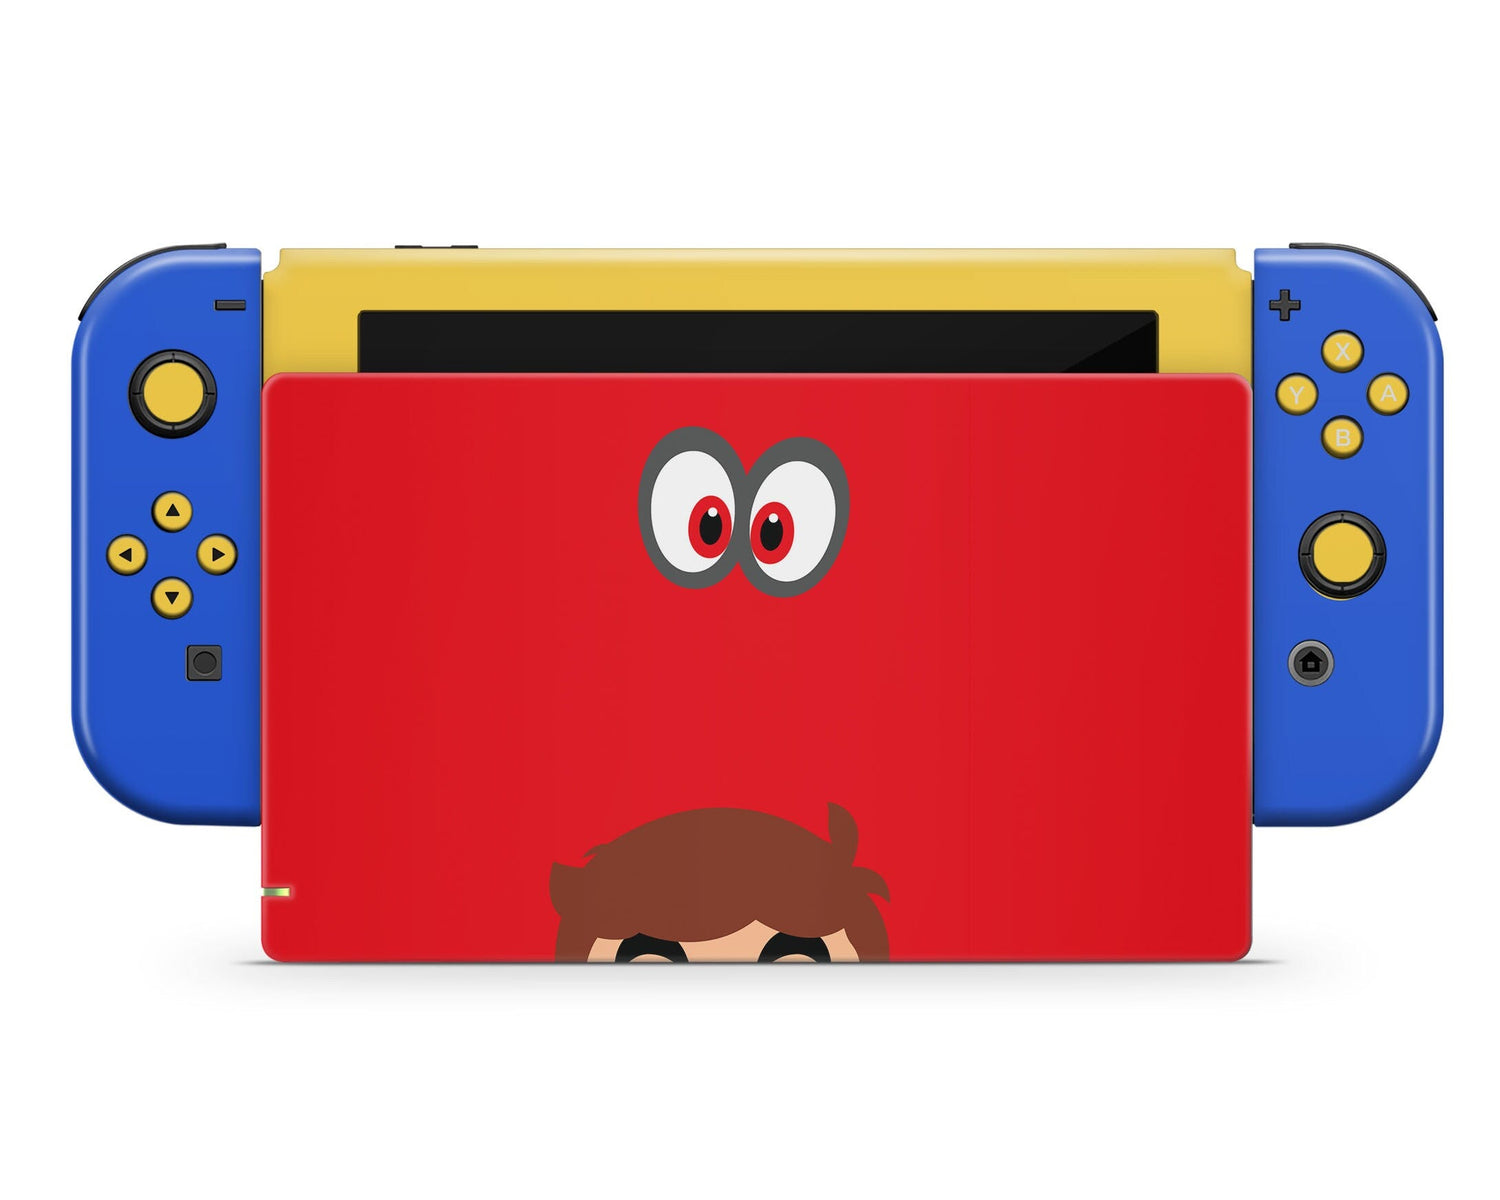 Análise Super Mario Odyssey (Nintendo Switch)